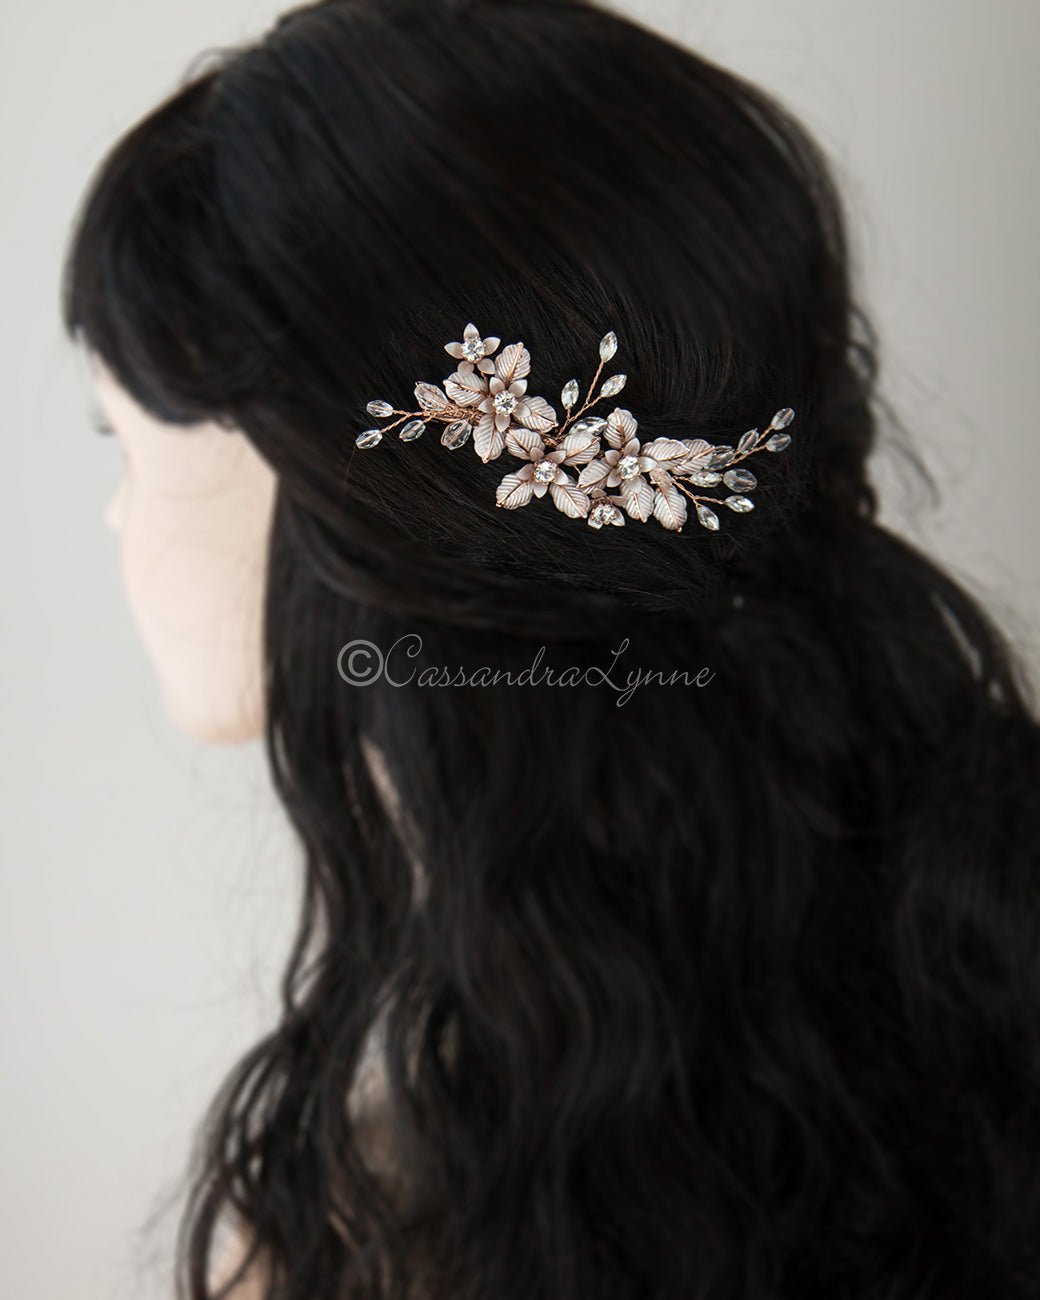 Petite Crystal Bridal Hair Clip of Brushed Metal Flowers - Cassandra Lynne